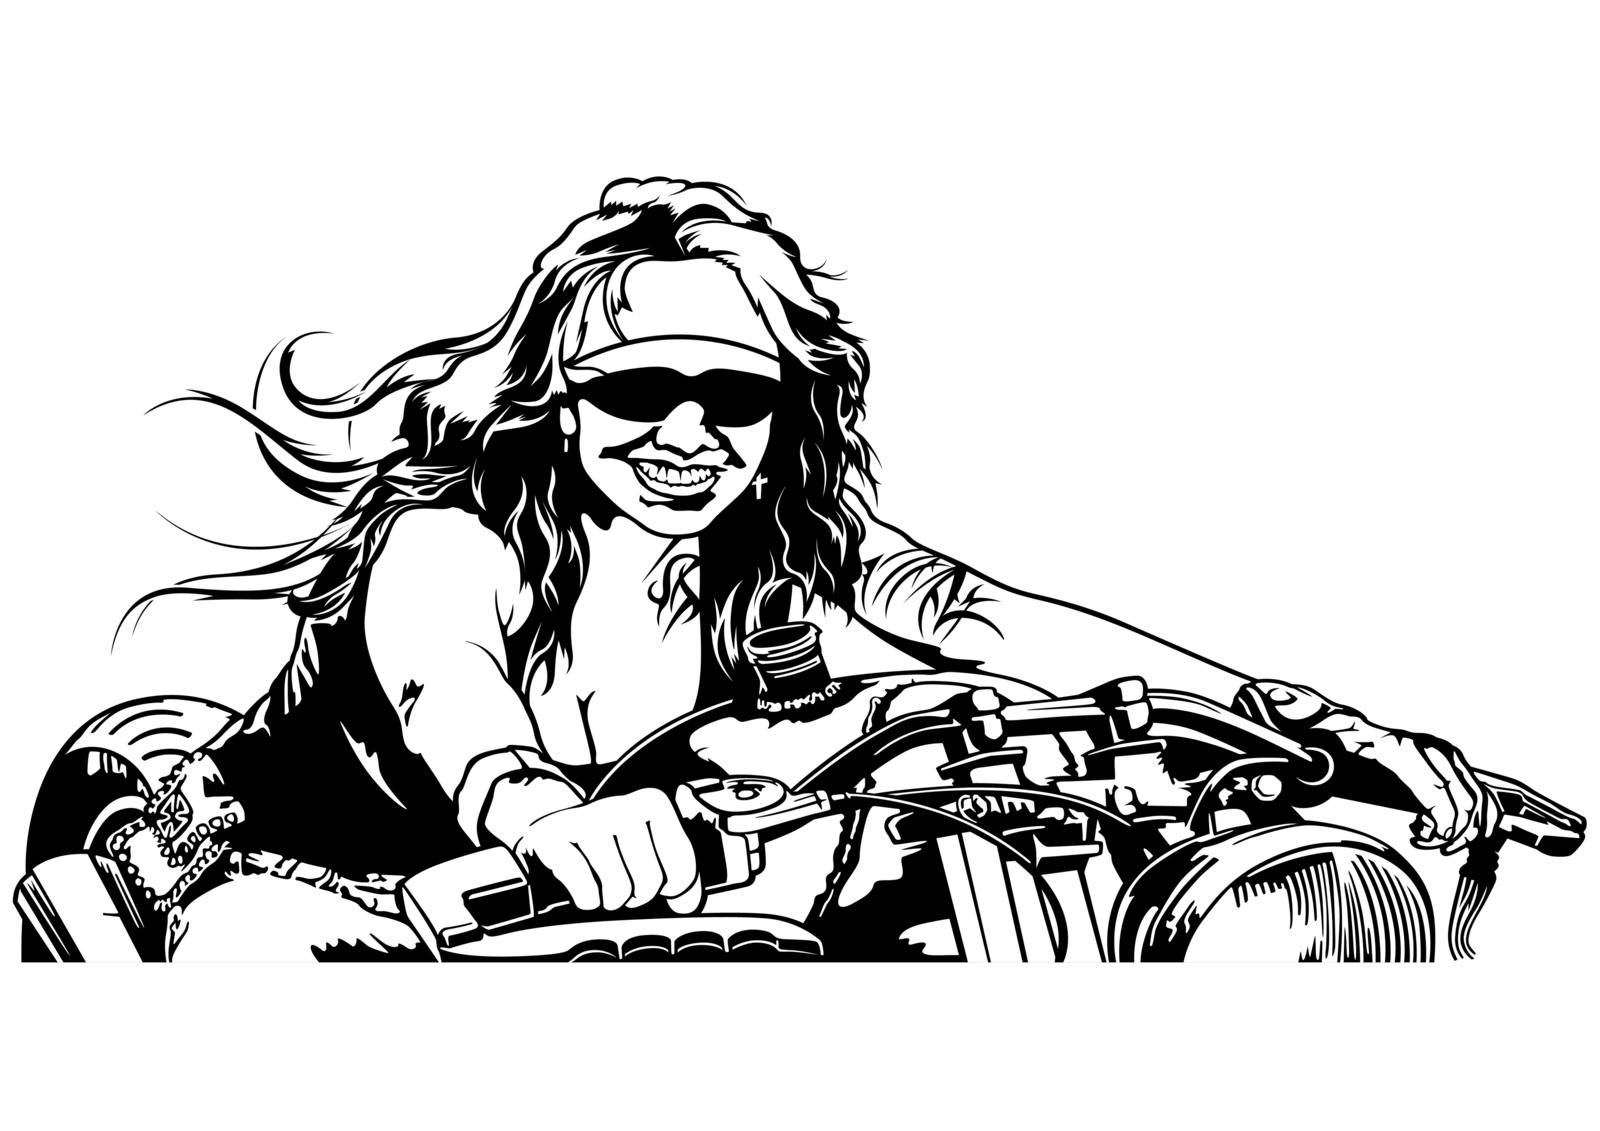 Woman Motorcyclist by illustratorCZ